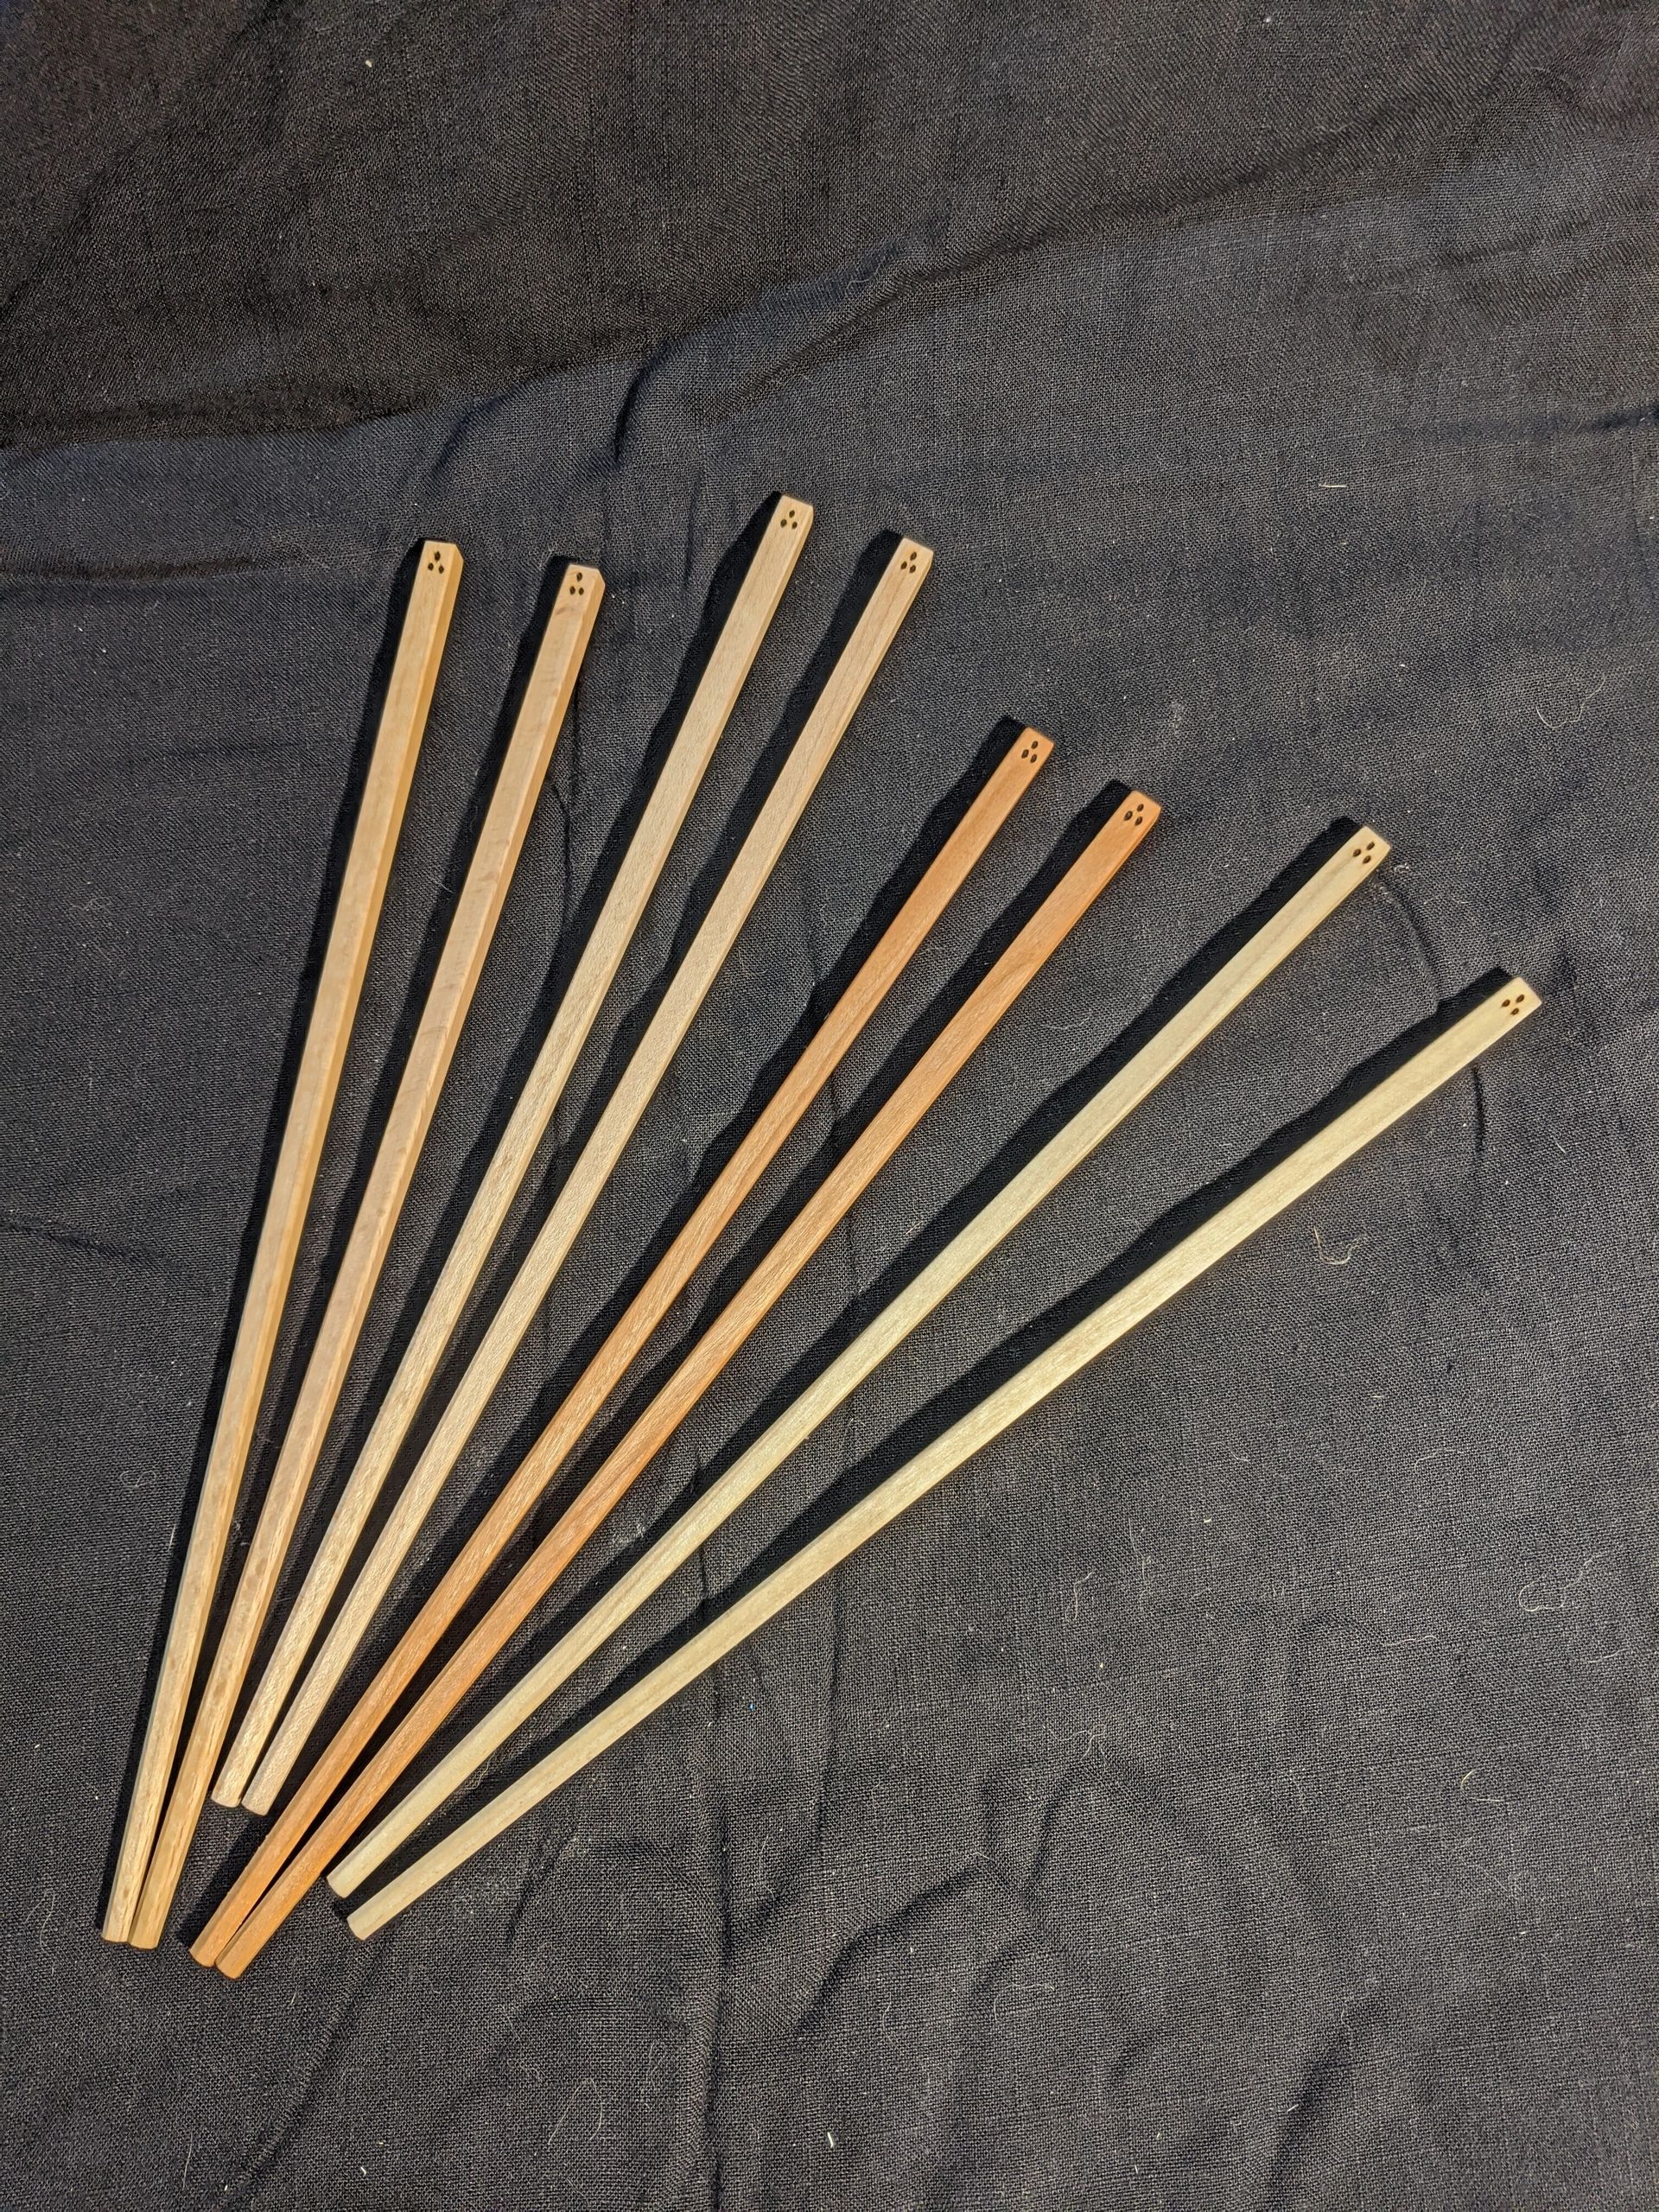 A selection of Maine hardwood chopsticks. Beech, Maple, Cherry, and Poplar